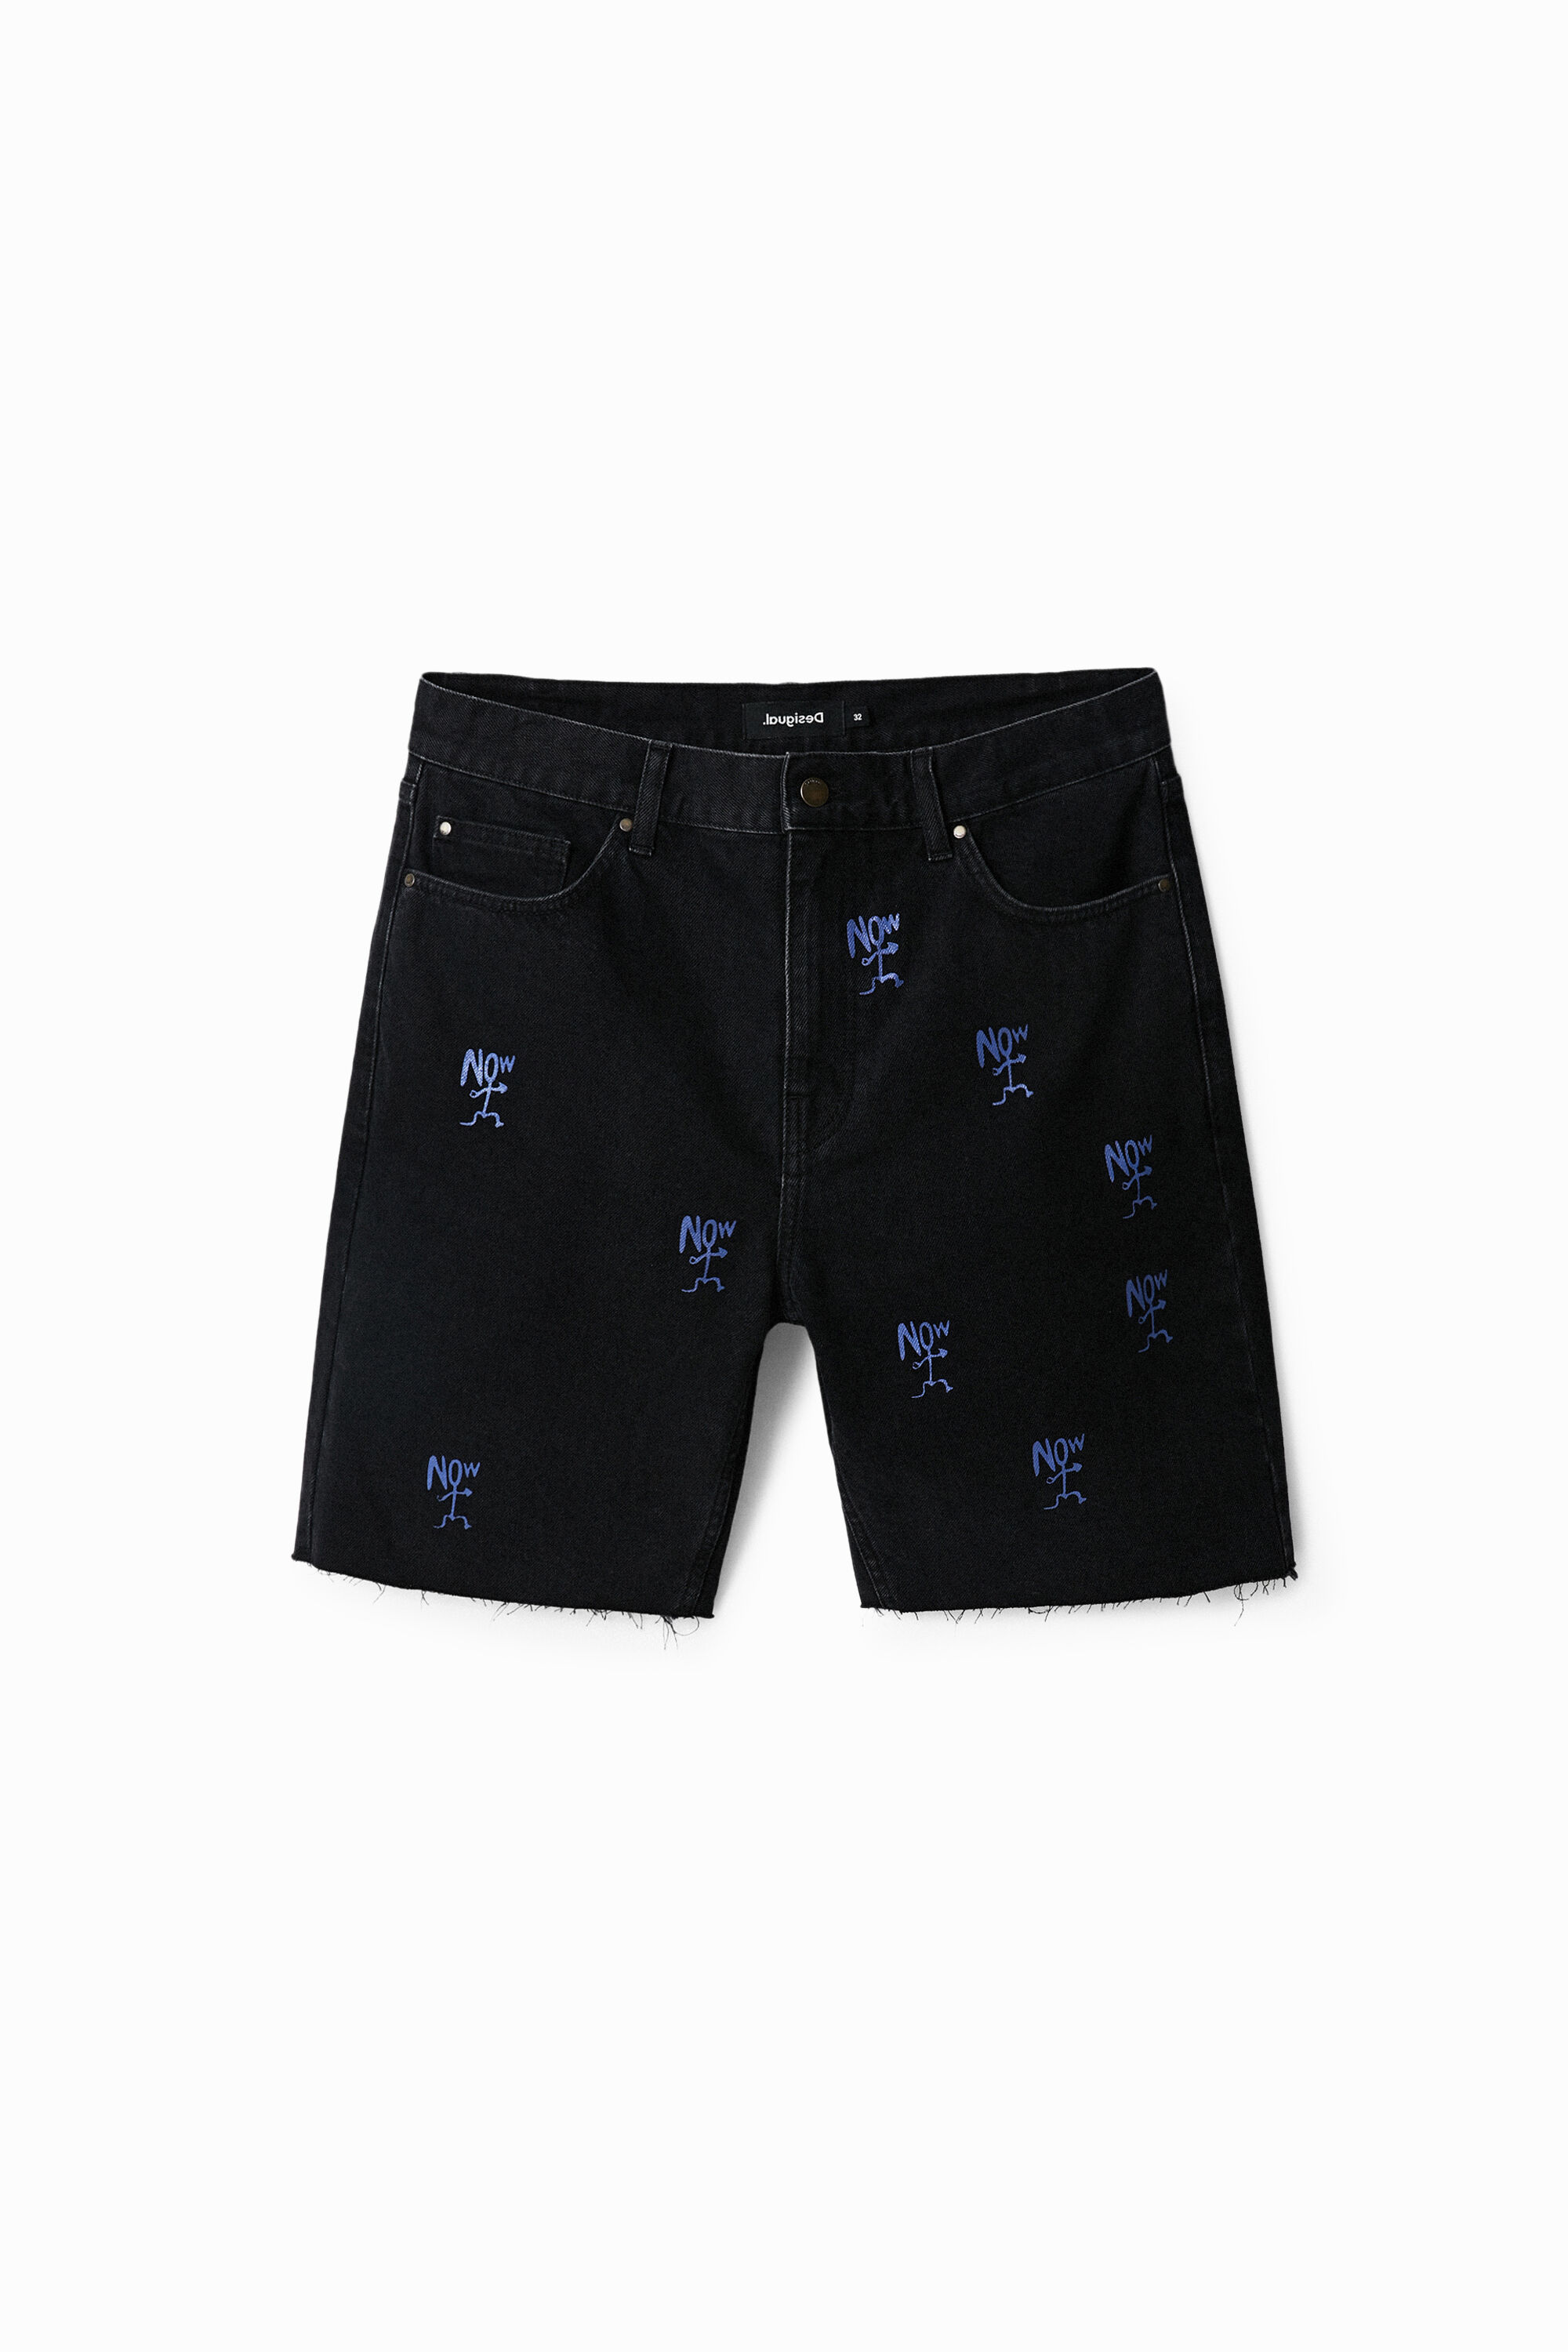 Desigual Denim Bermuda Shorts, Frayed Hem In Black